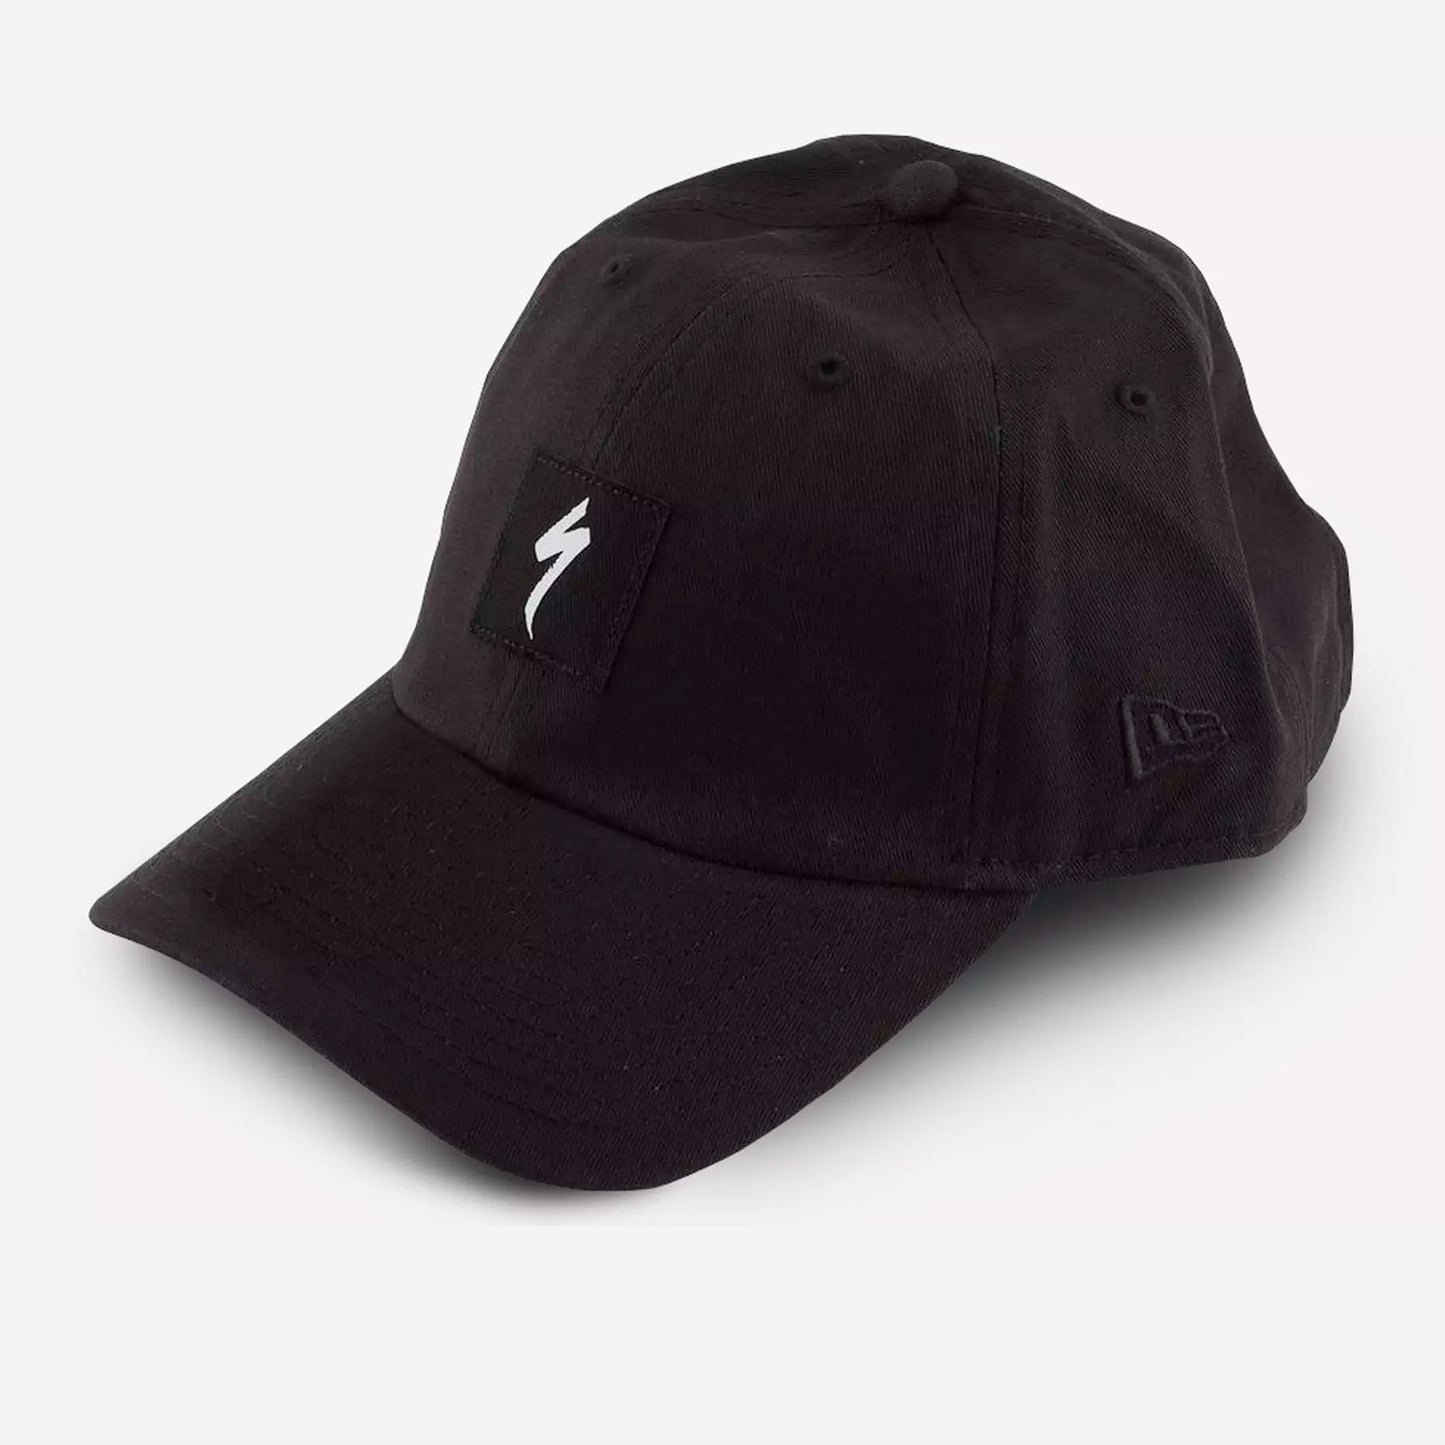 Specialized New Era Classic Hat, Black